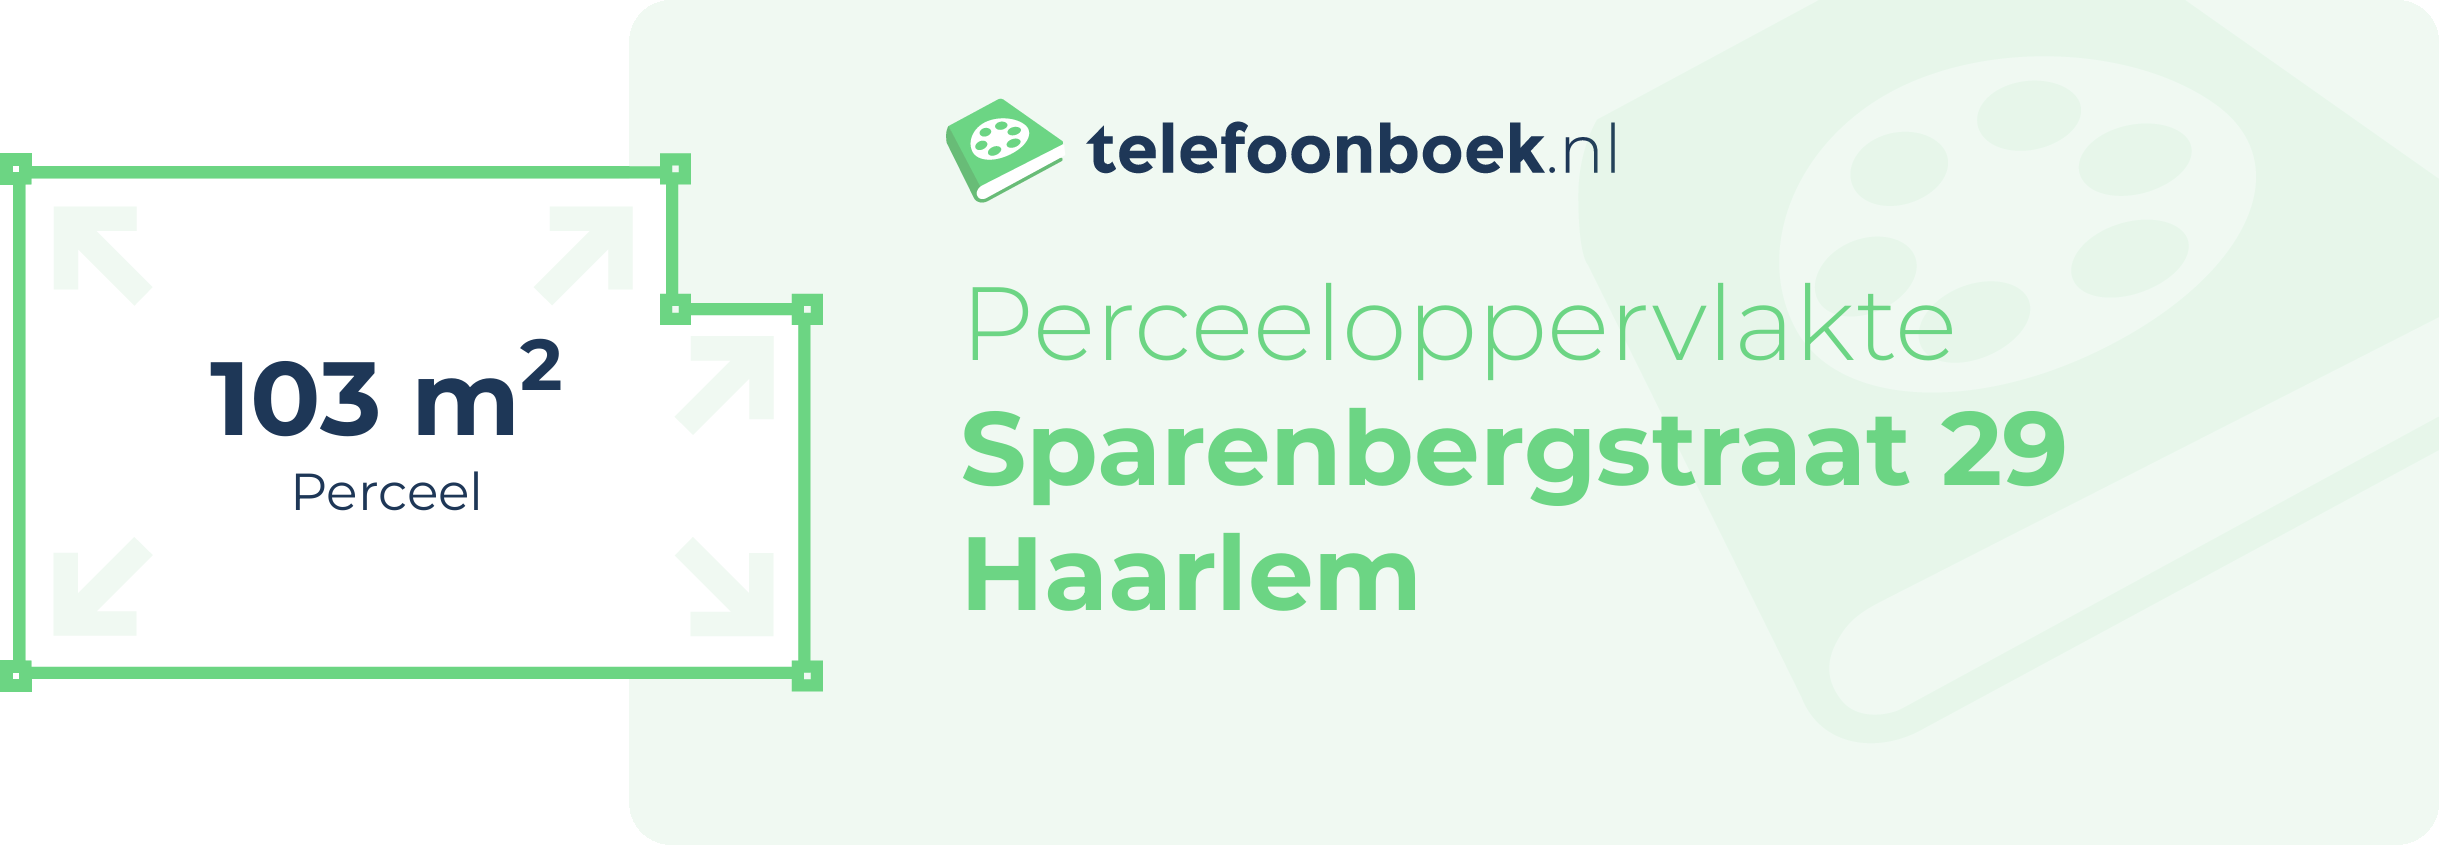 Perceeloppervlakte Sparenbergstraat 29 Haarlem